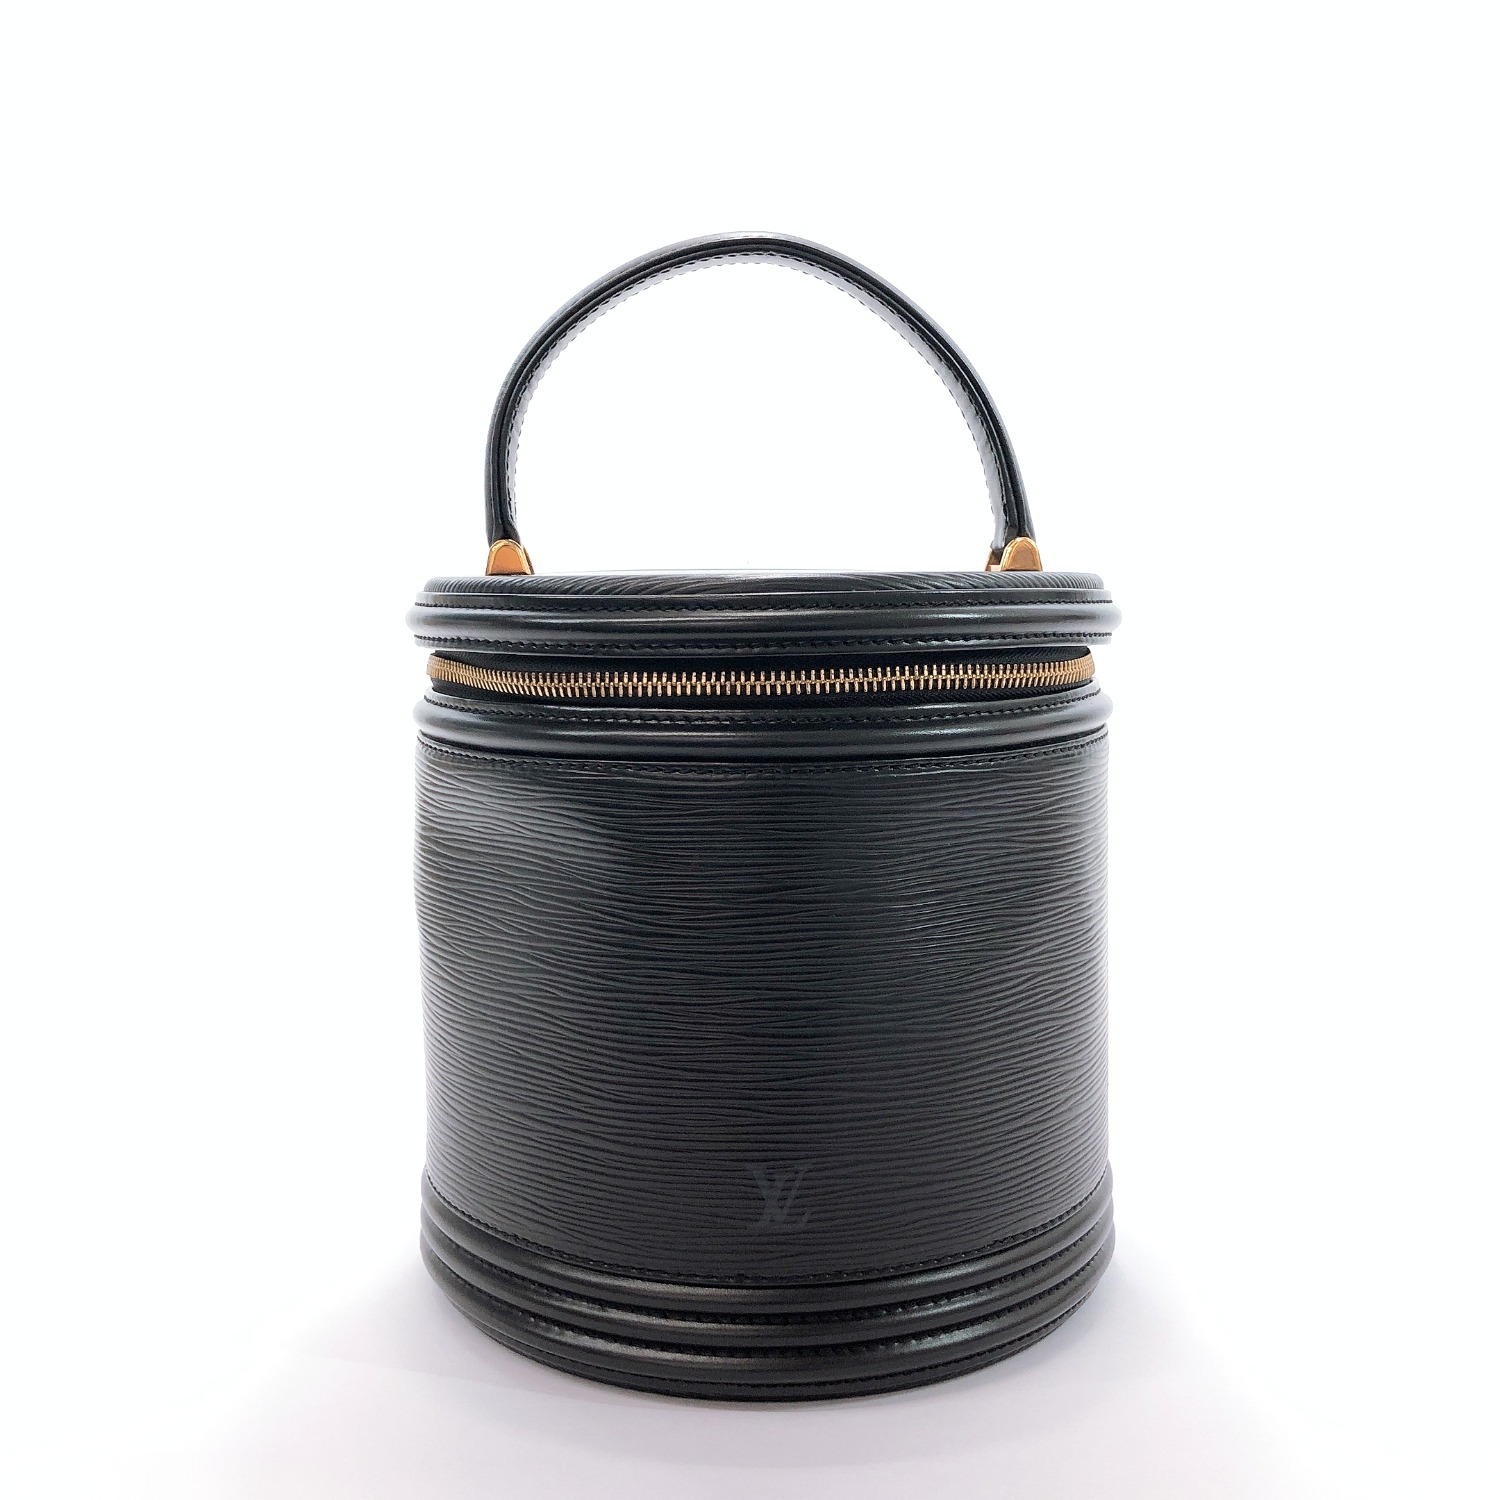 LOUIS VUITTON Handbag M48032 Cannes Vanity bag Epi Leather Women | eBay